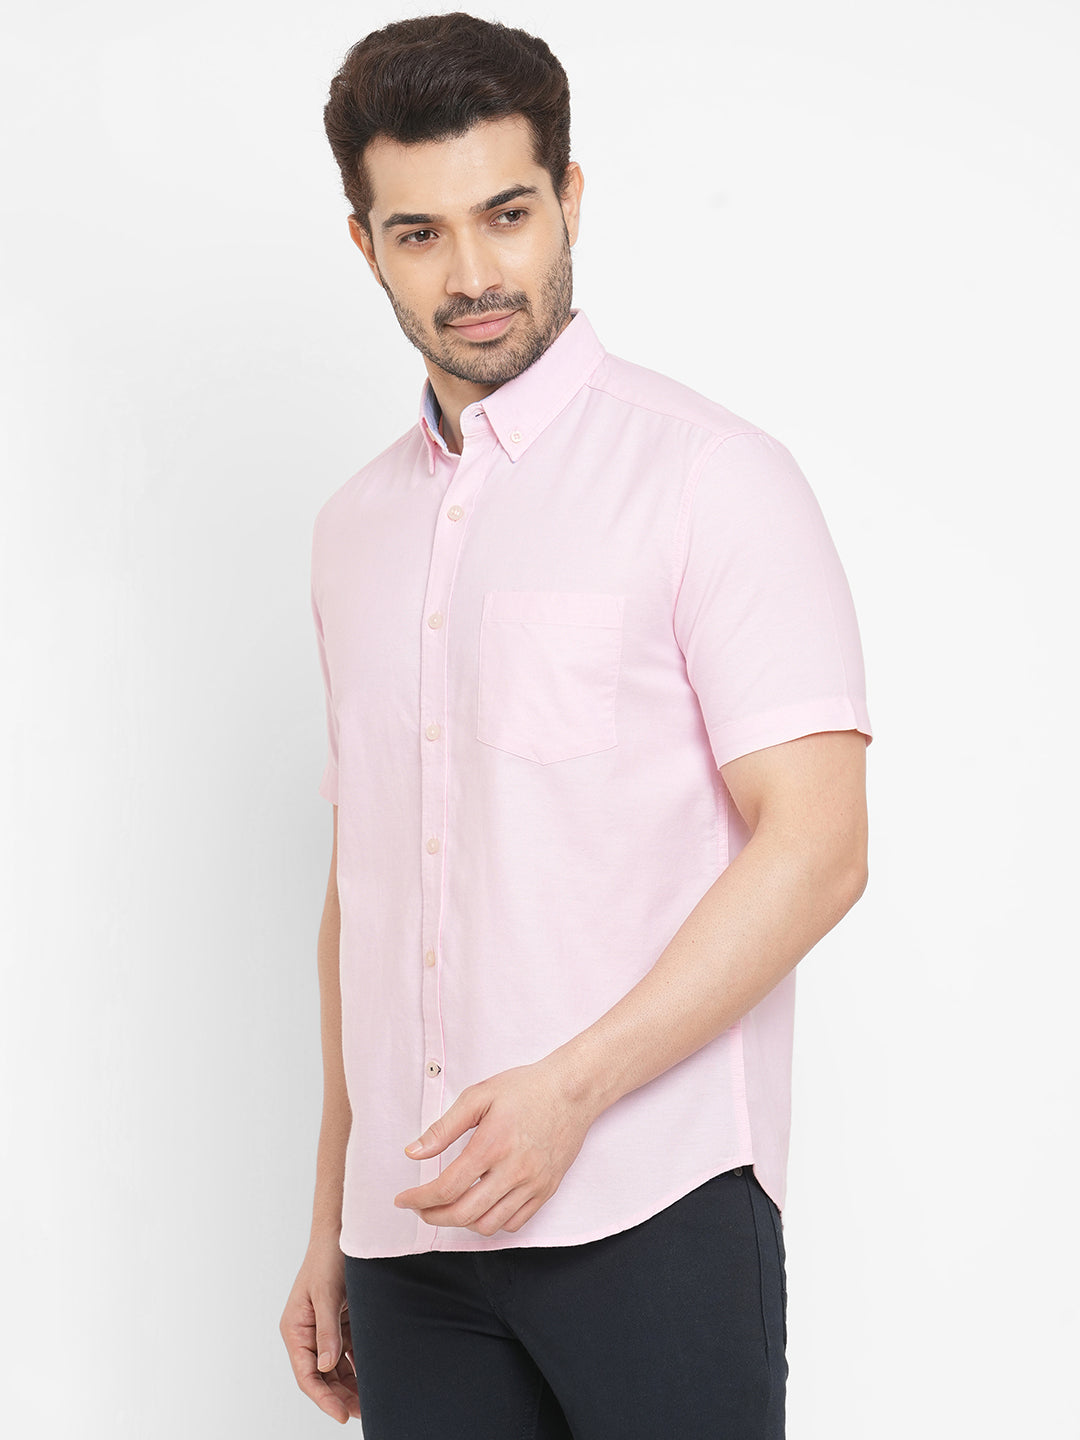 Men's Oxford Cotton Button Down Collar Short Sleeved Shirt - Pink